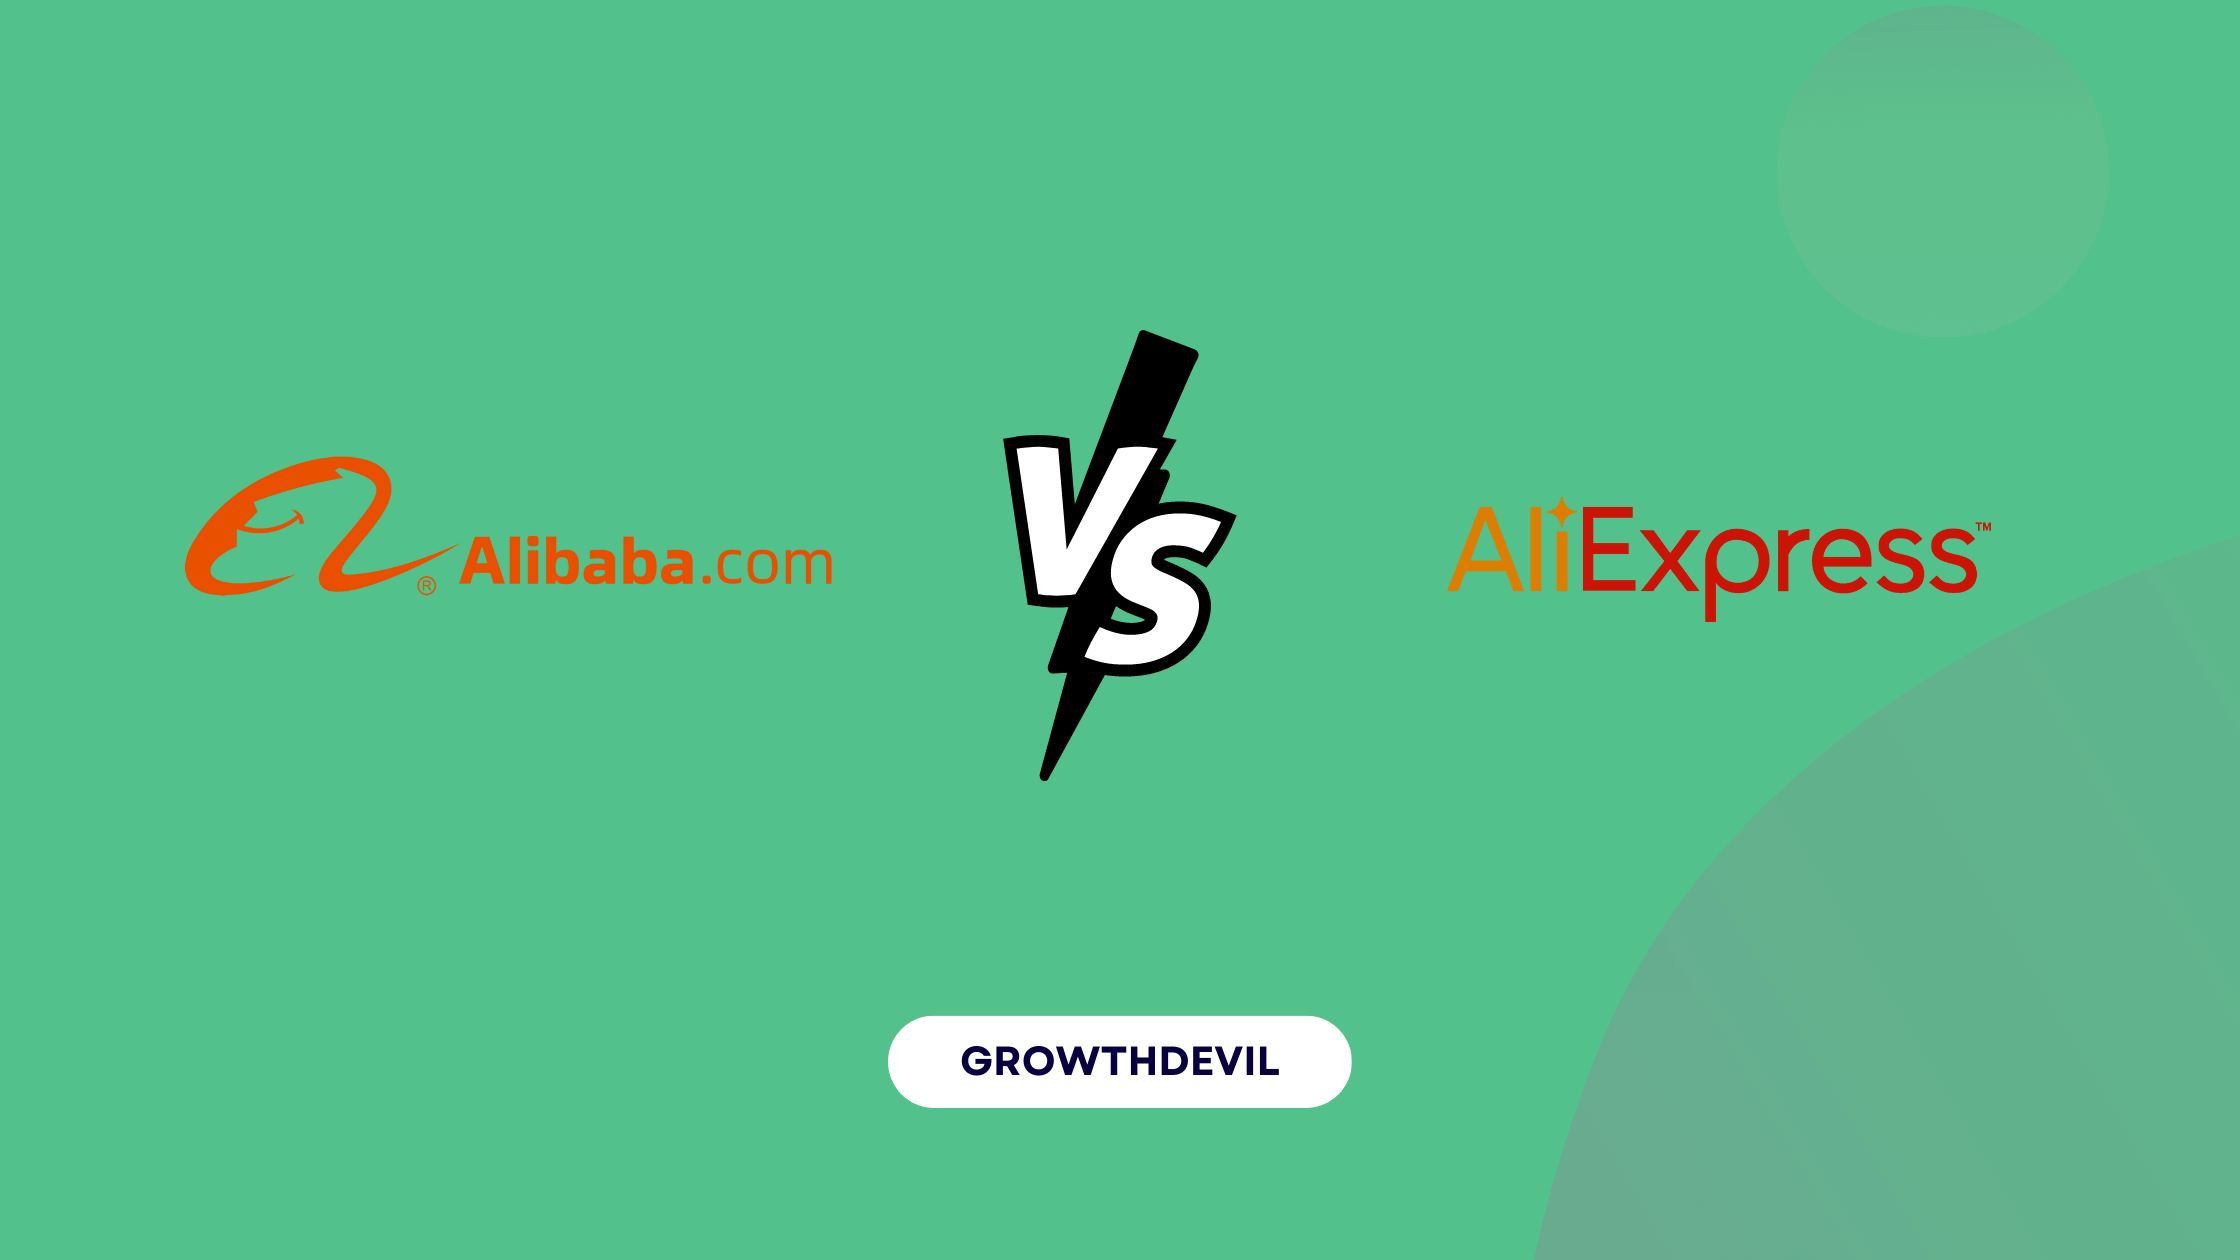 Alibaba vs AliExpress - GrowthDevil